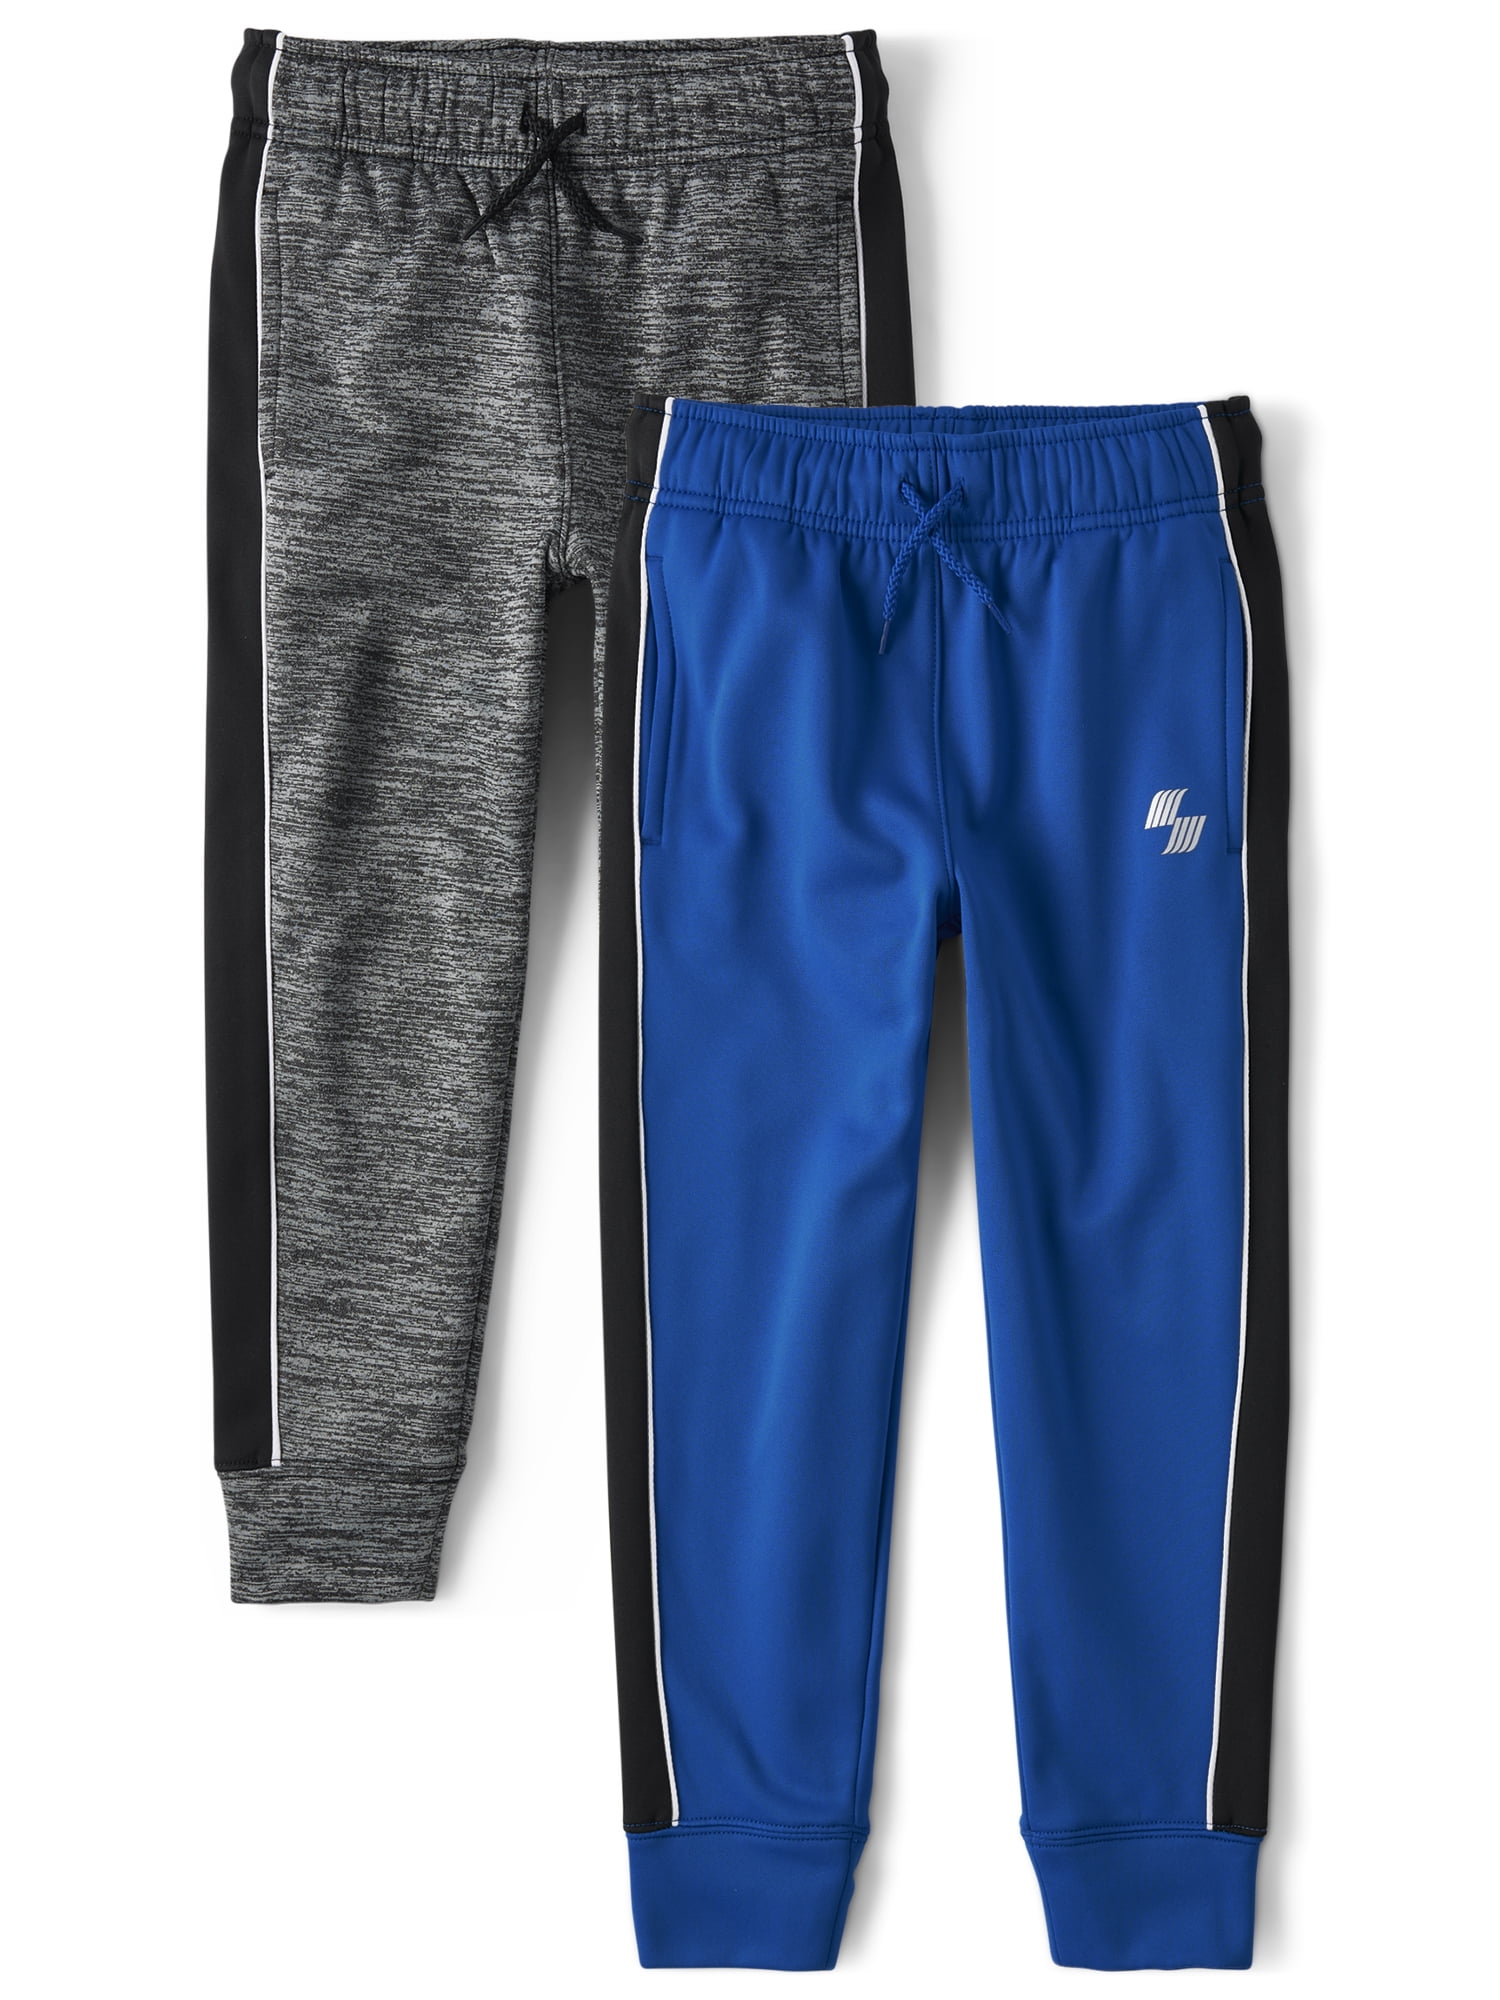 Jeans & Pants | Dazzle Stretchable Nylon Track Size L | Freeup